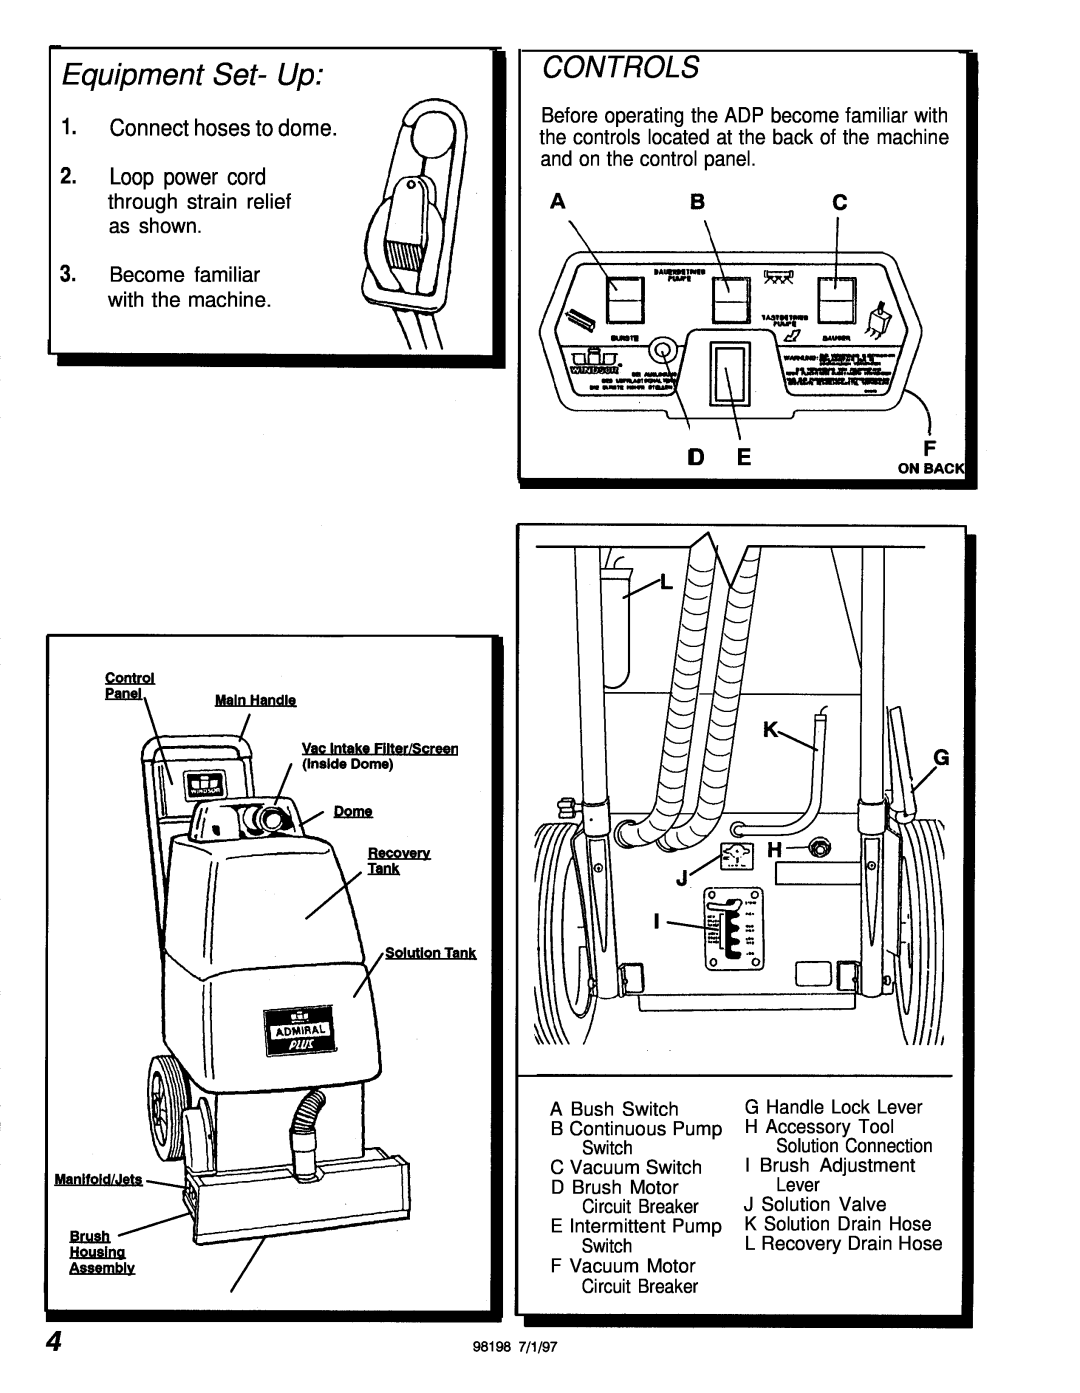 Windsor ADPJ manual Equipment Set- Up, Controls 